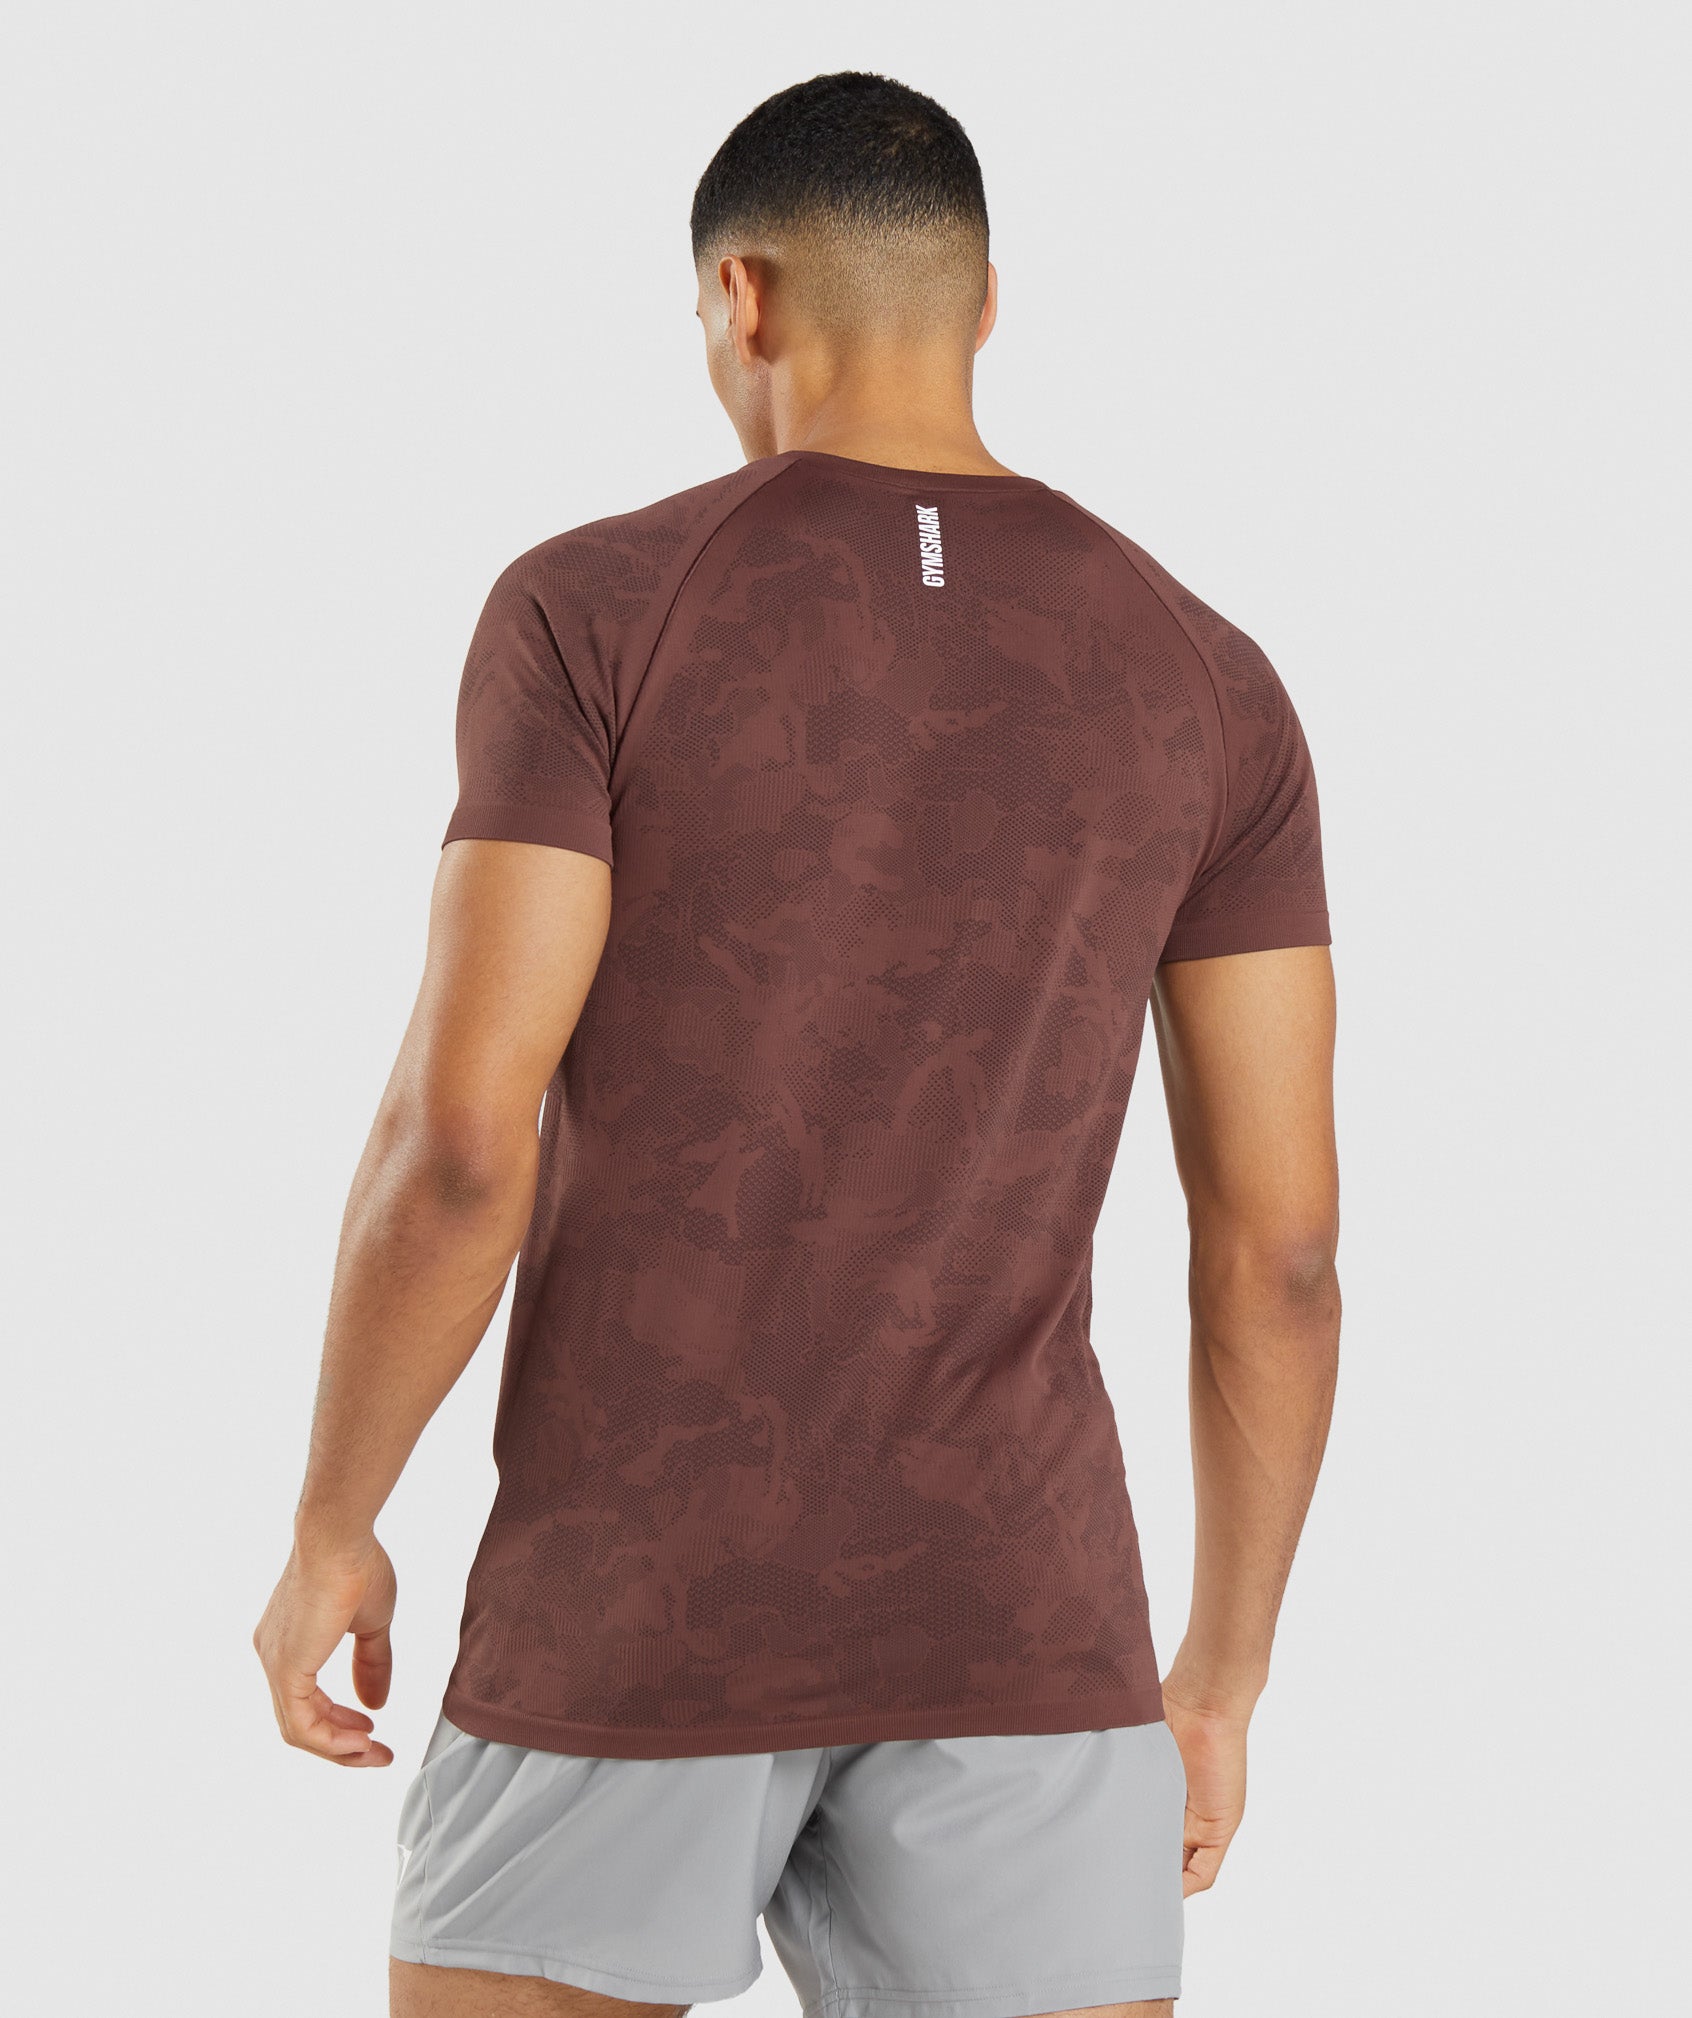 Geo Seamless T-Shirt in Cherry Brown/Black